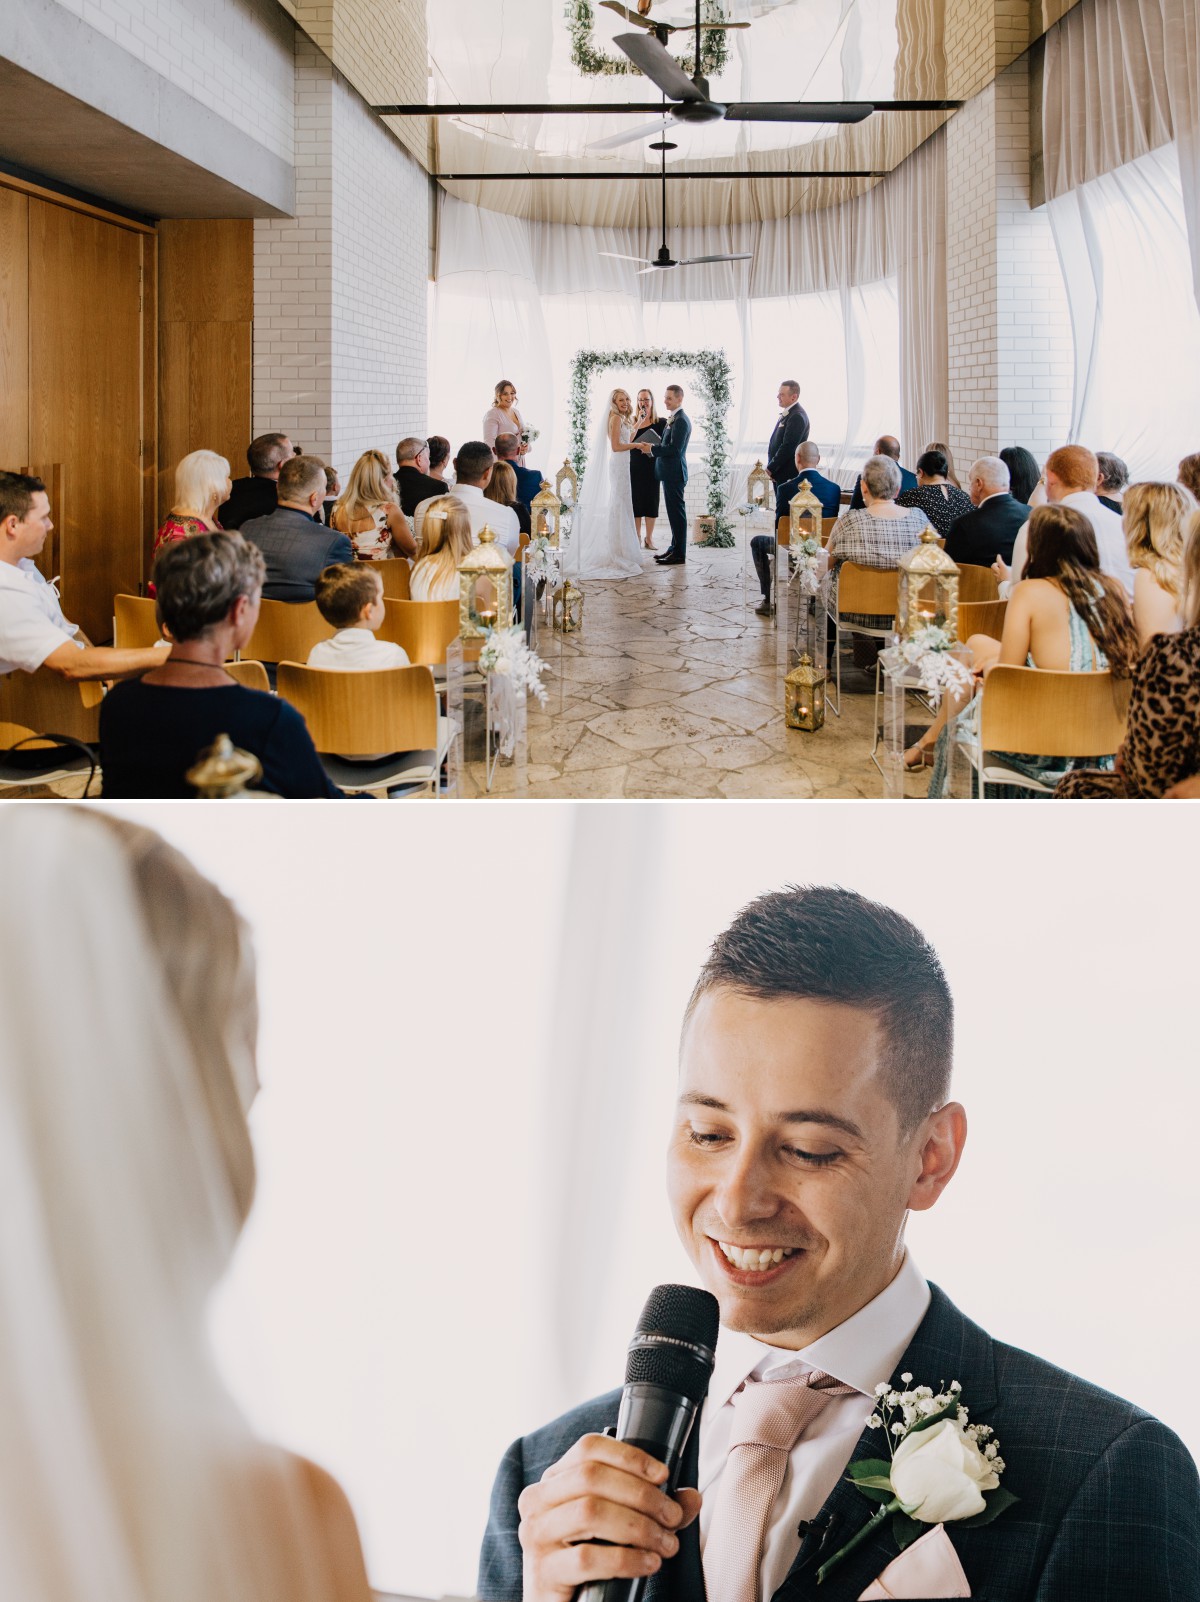 The Calile Hotel wedding ceremony